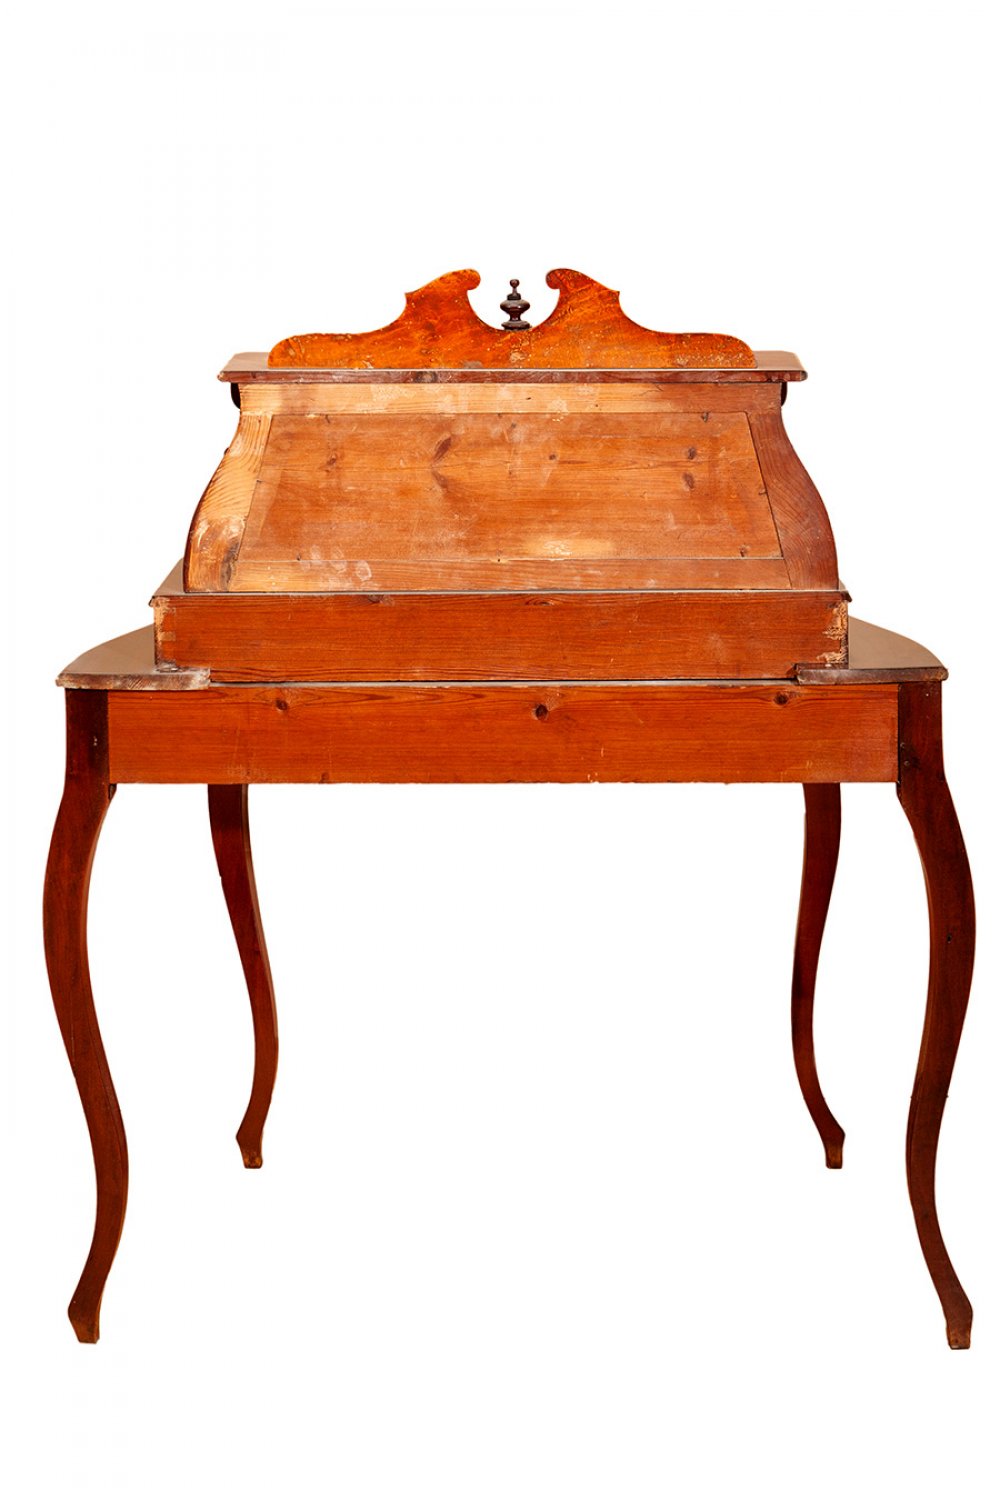 Fernandino style writing table.Walnut wood.Measurements: 79 x 44 x 96 cm.Fernandino style writing - Image 2 of 4